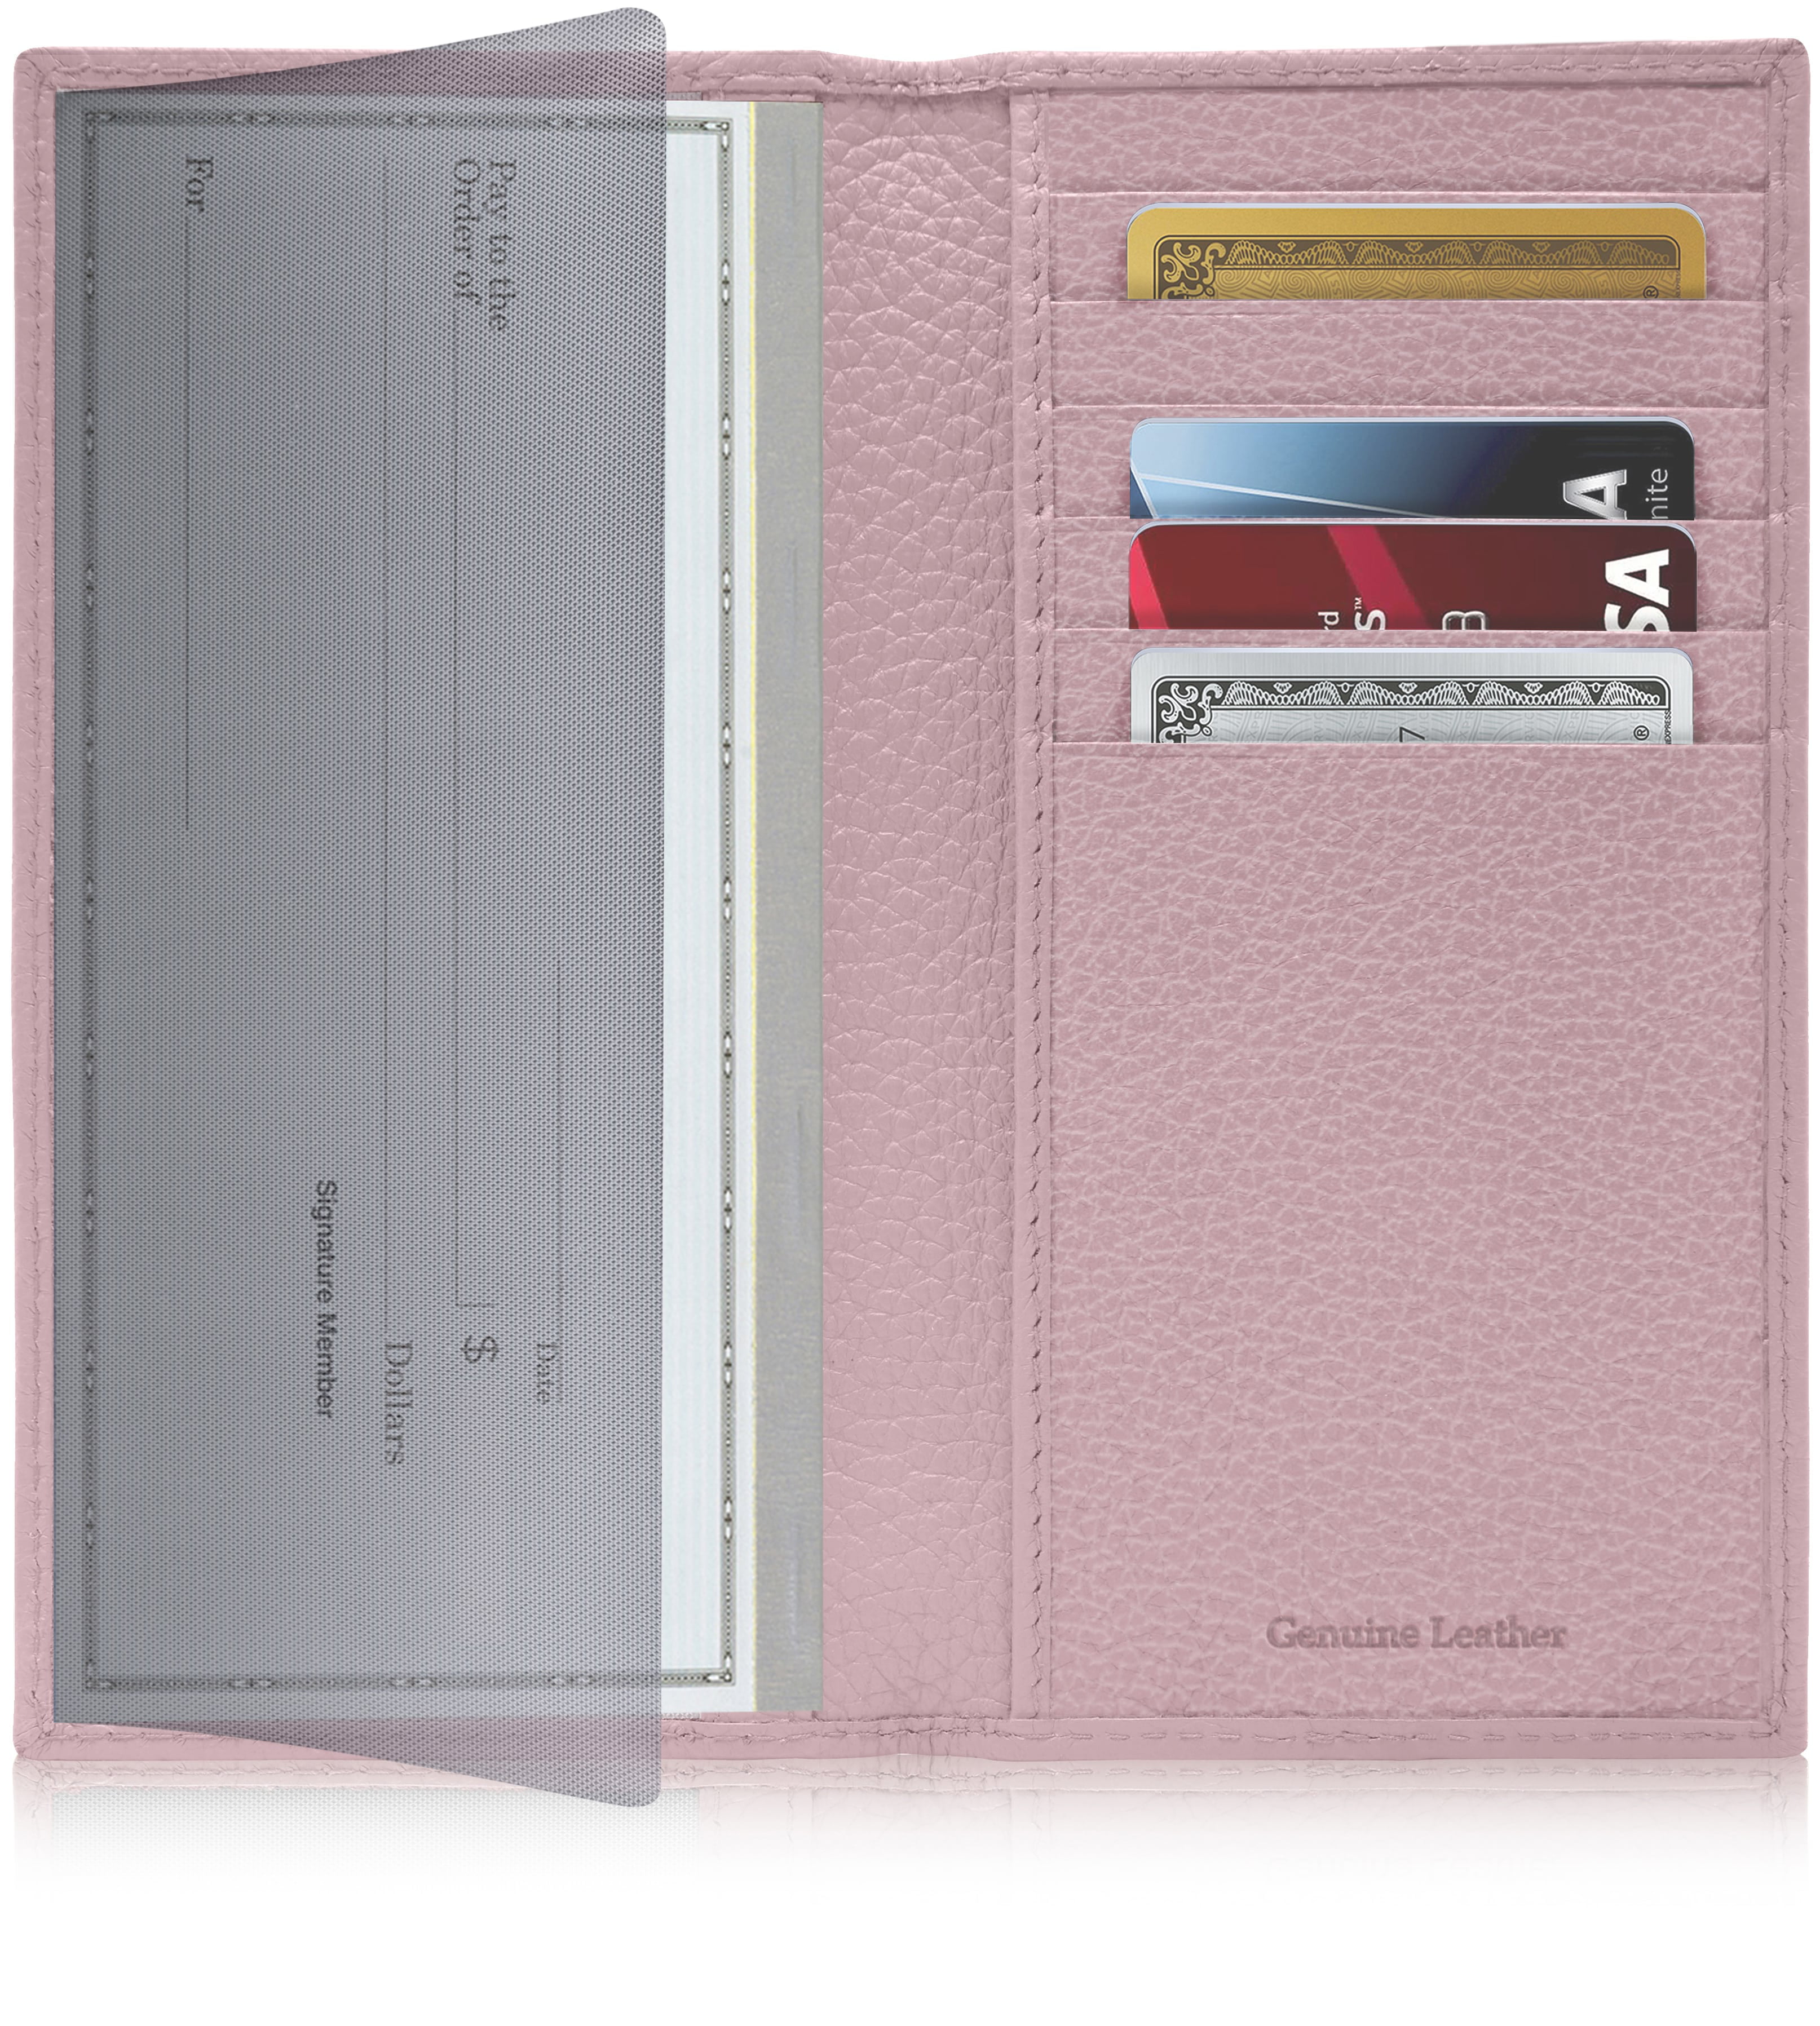 Genuine Leather Checkbook Cover For Men And Women - Checkbook Holder ...